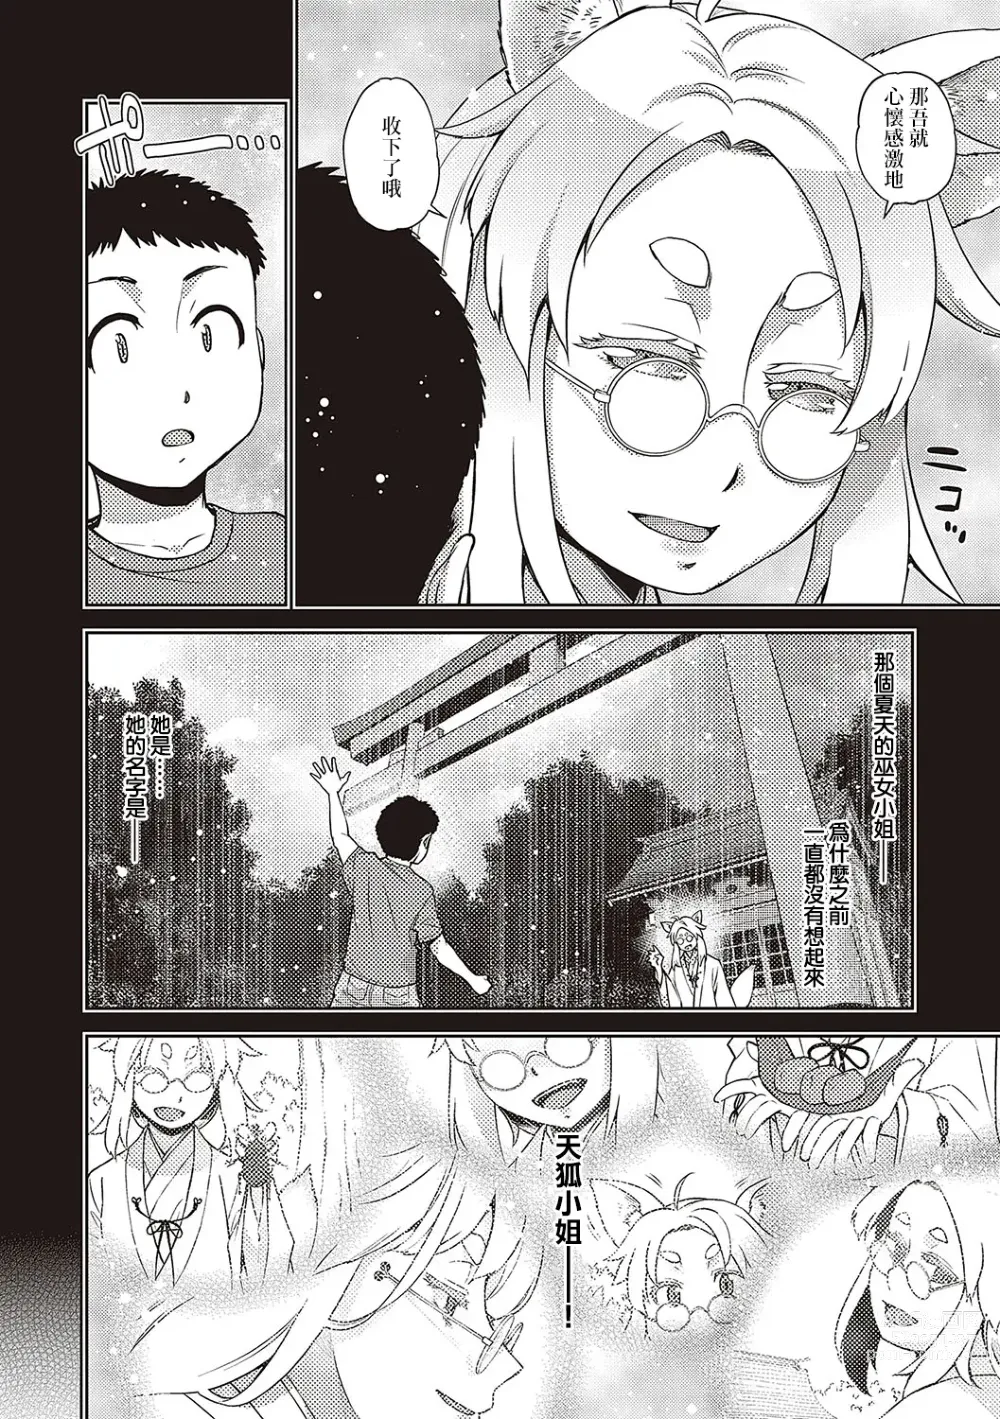 Page 6 of manga Mateba Megane no Kitsune Ari